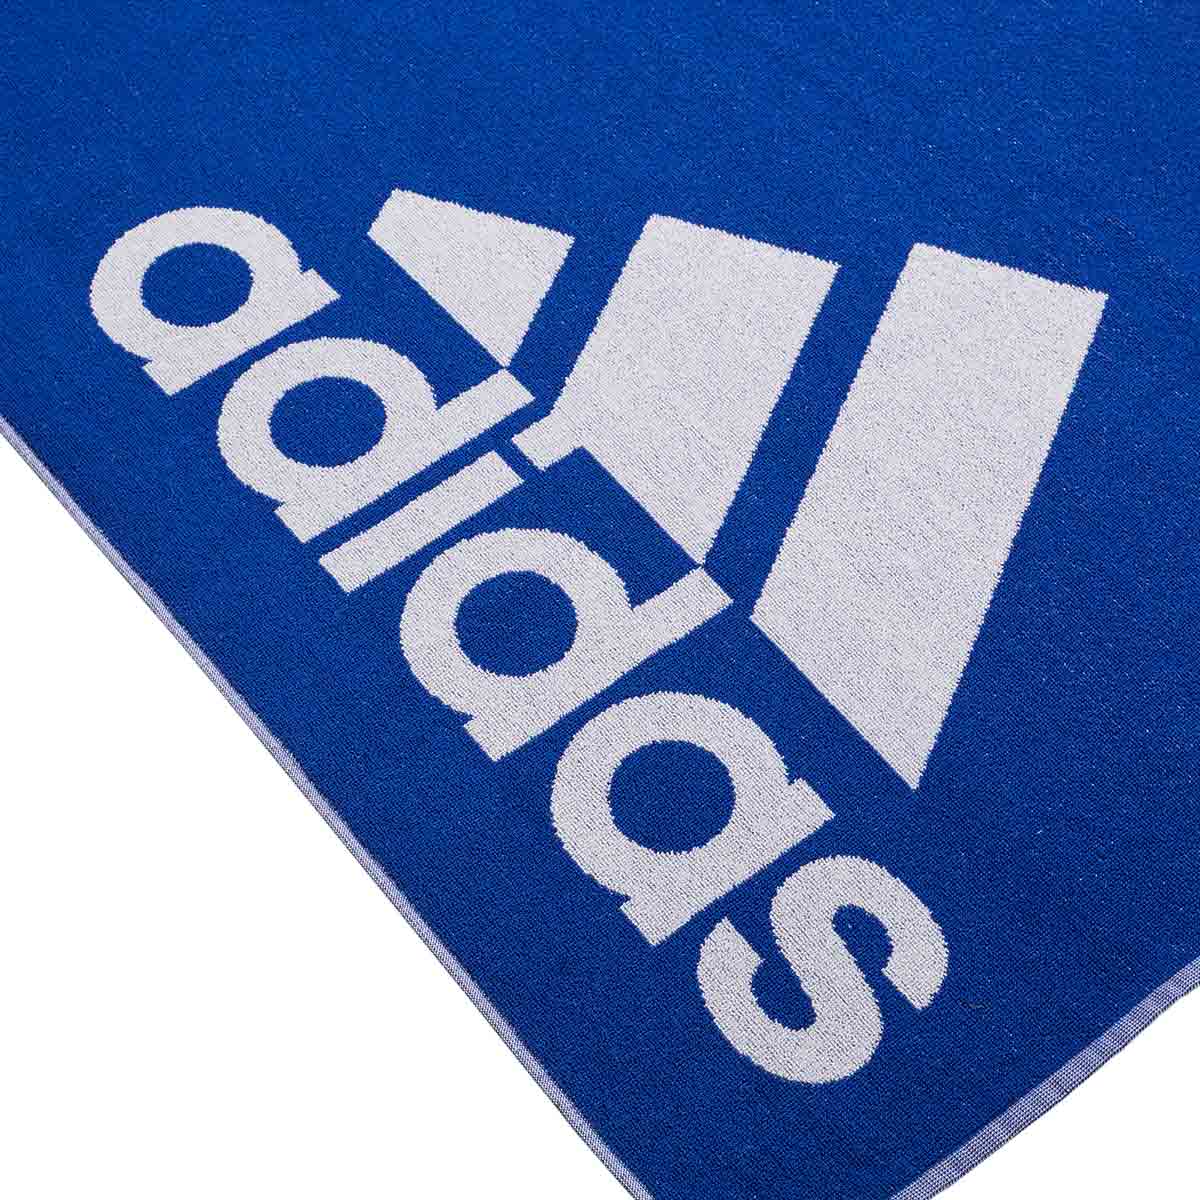 Adidas Large Towel - Royal Blue